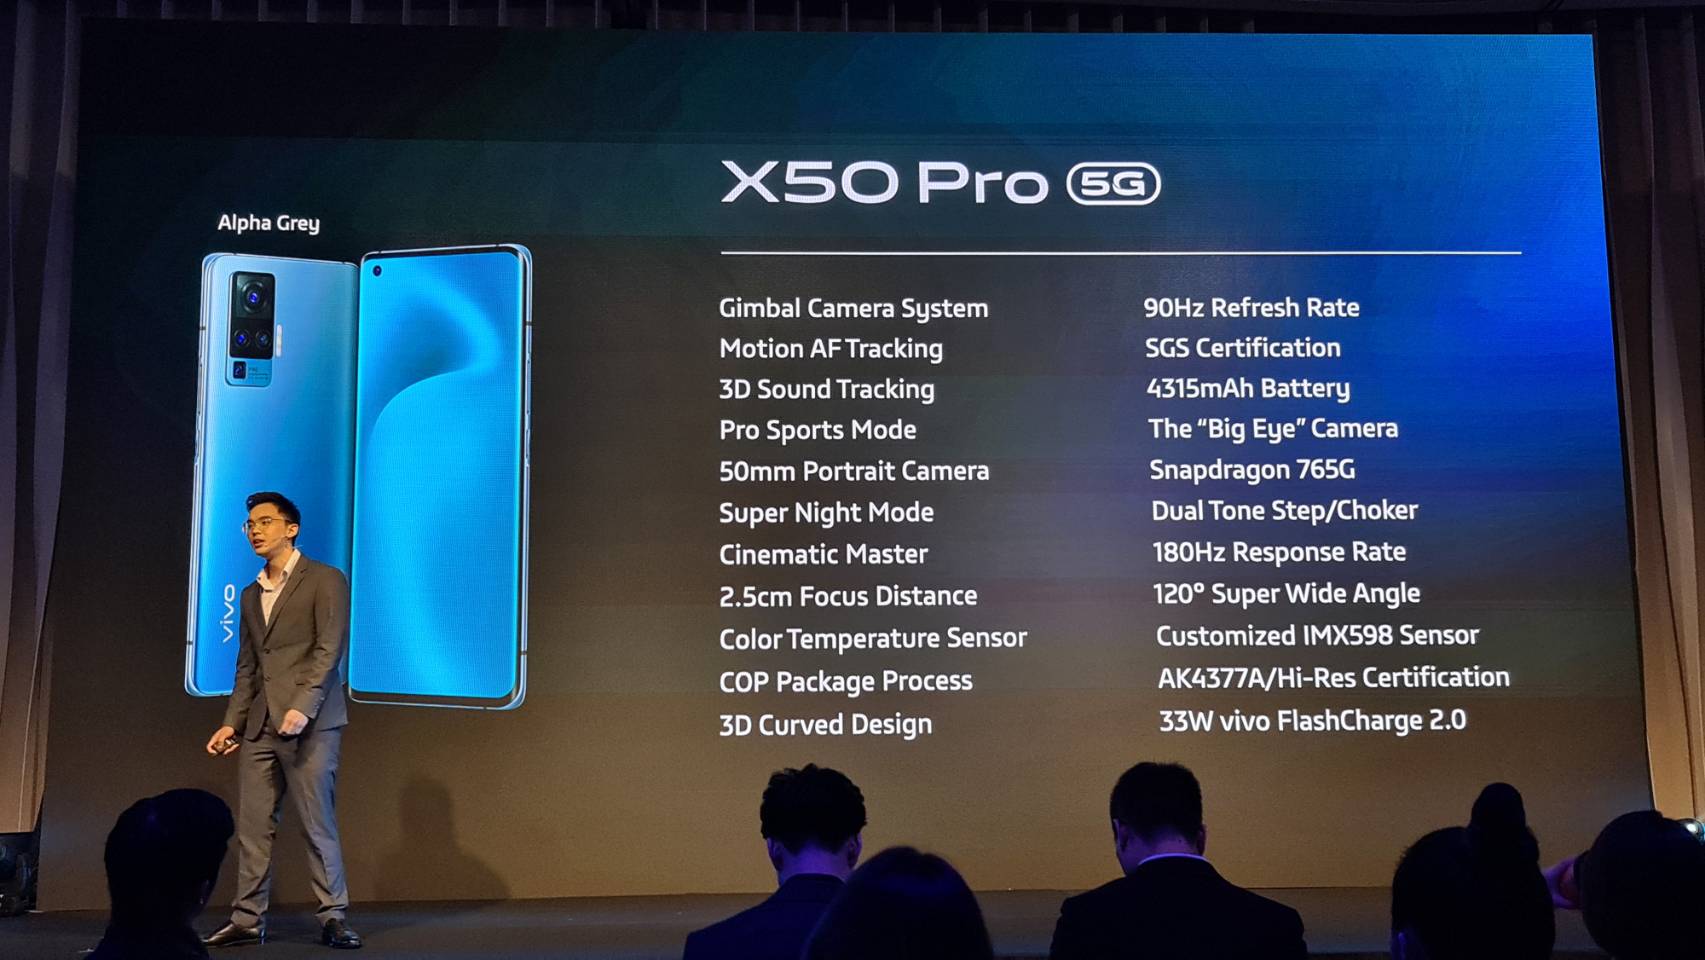 Vivo X50 Pro 5G